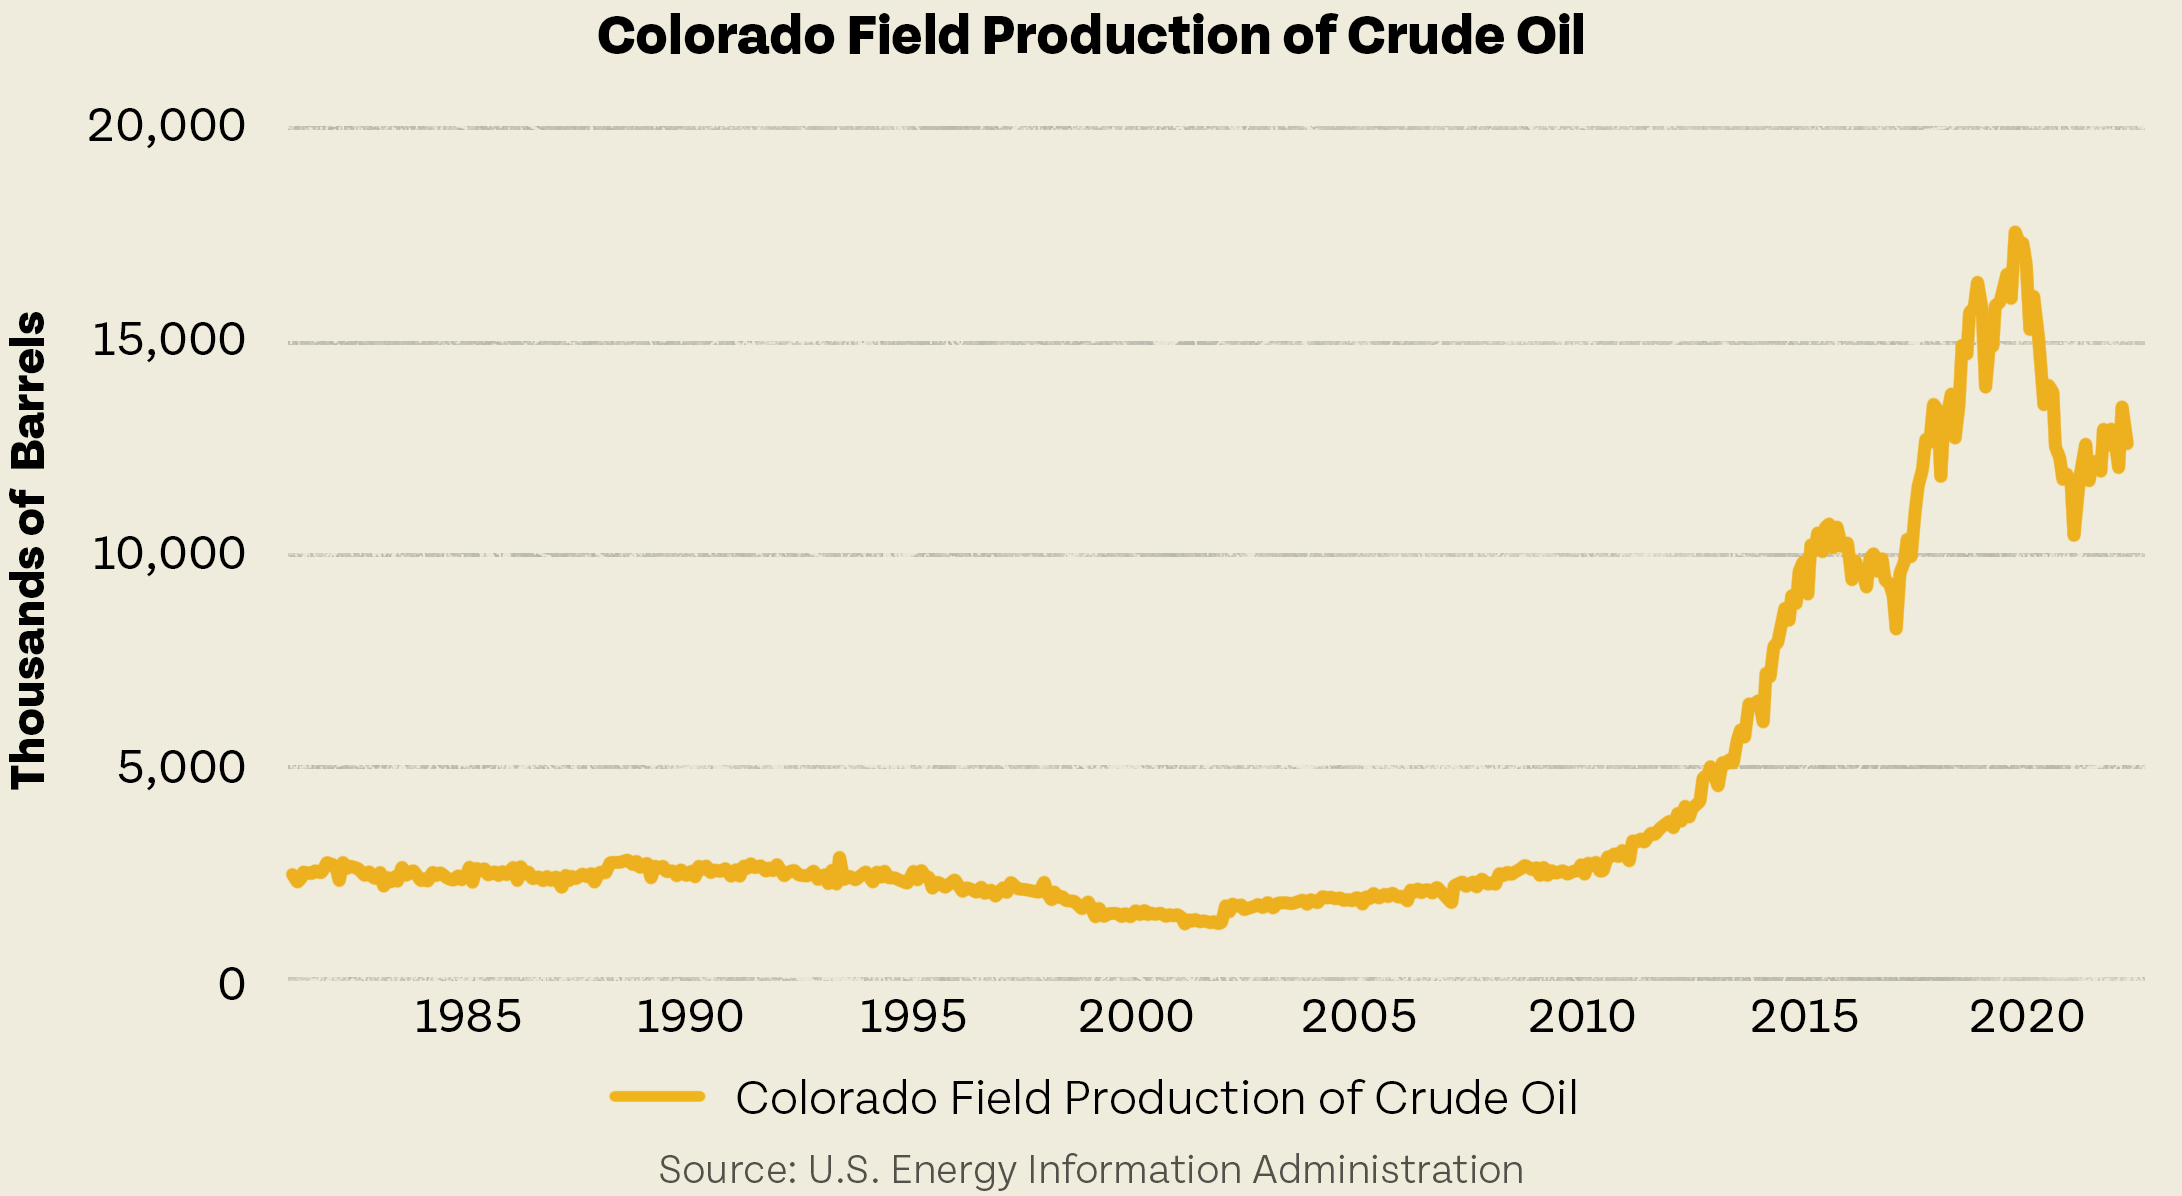 Colorado Field Production of Crude Oil